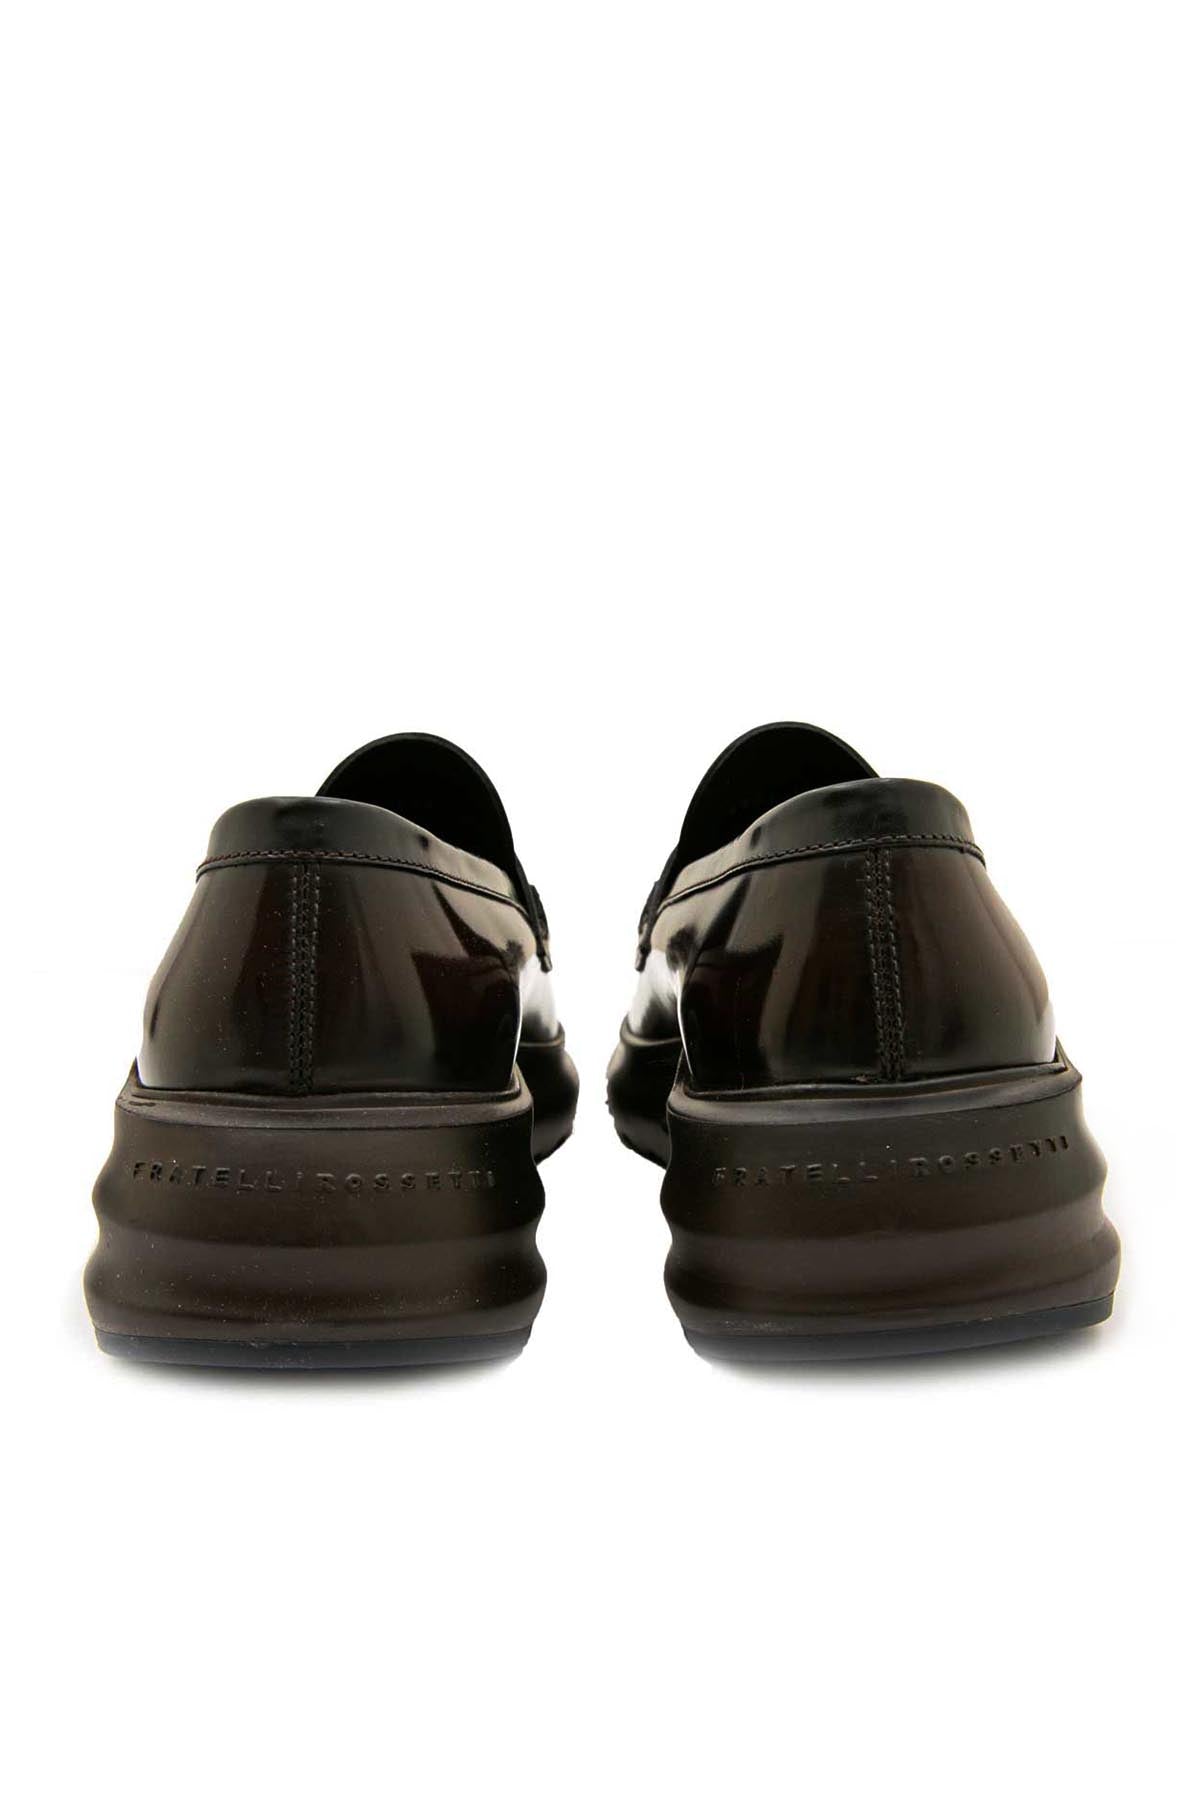 Fratelli Rossetti Kemerli Loafer Ayakkabı-Libas Trendy Fashion Store